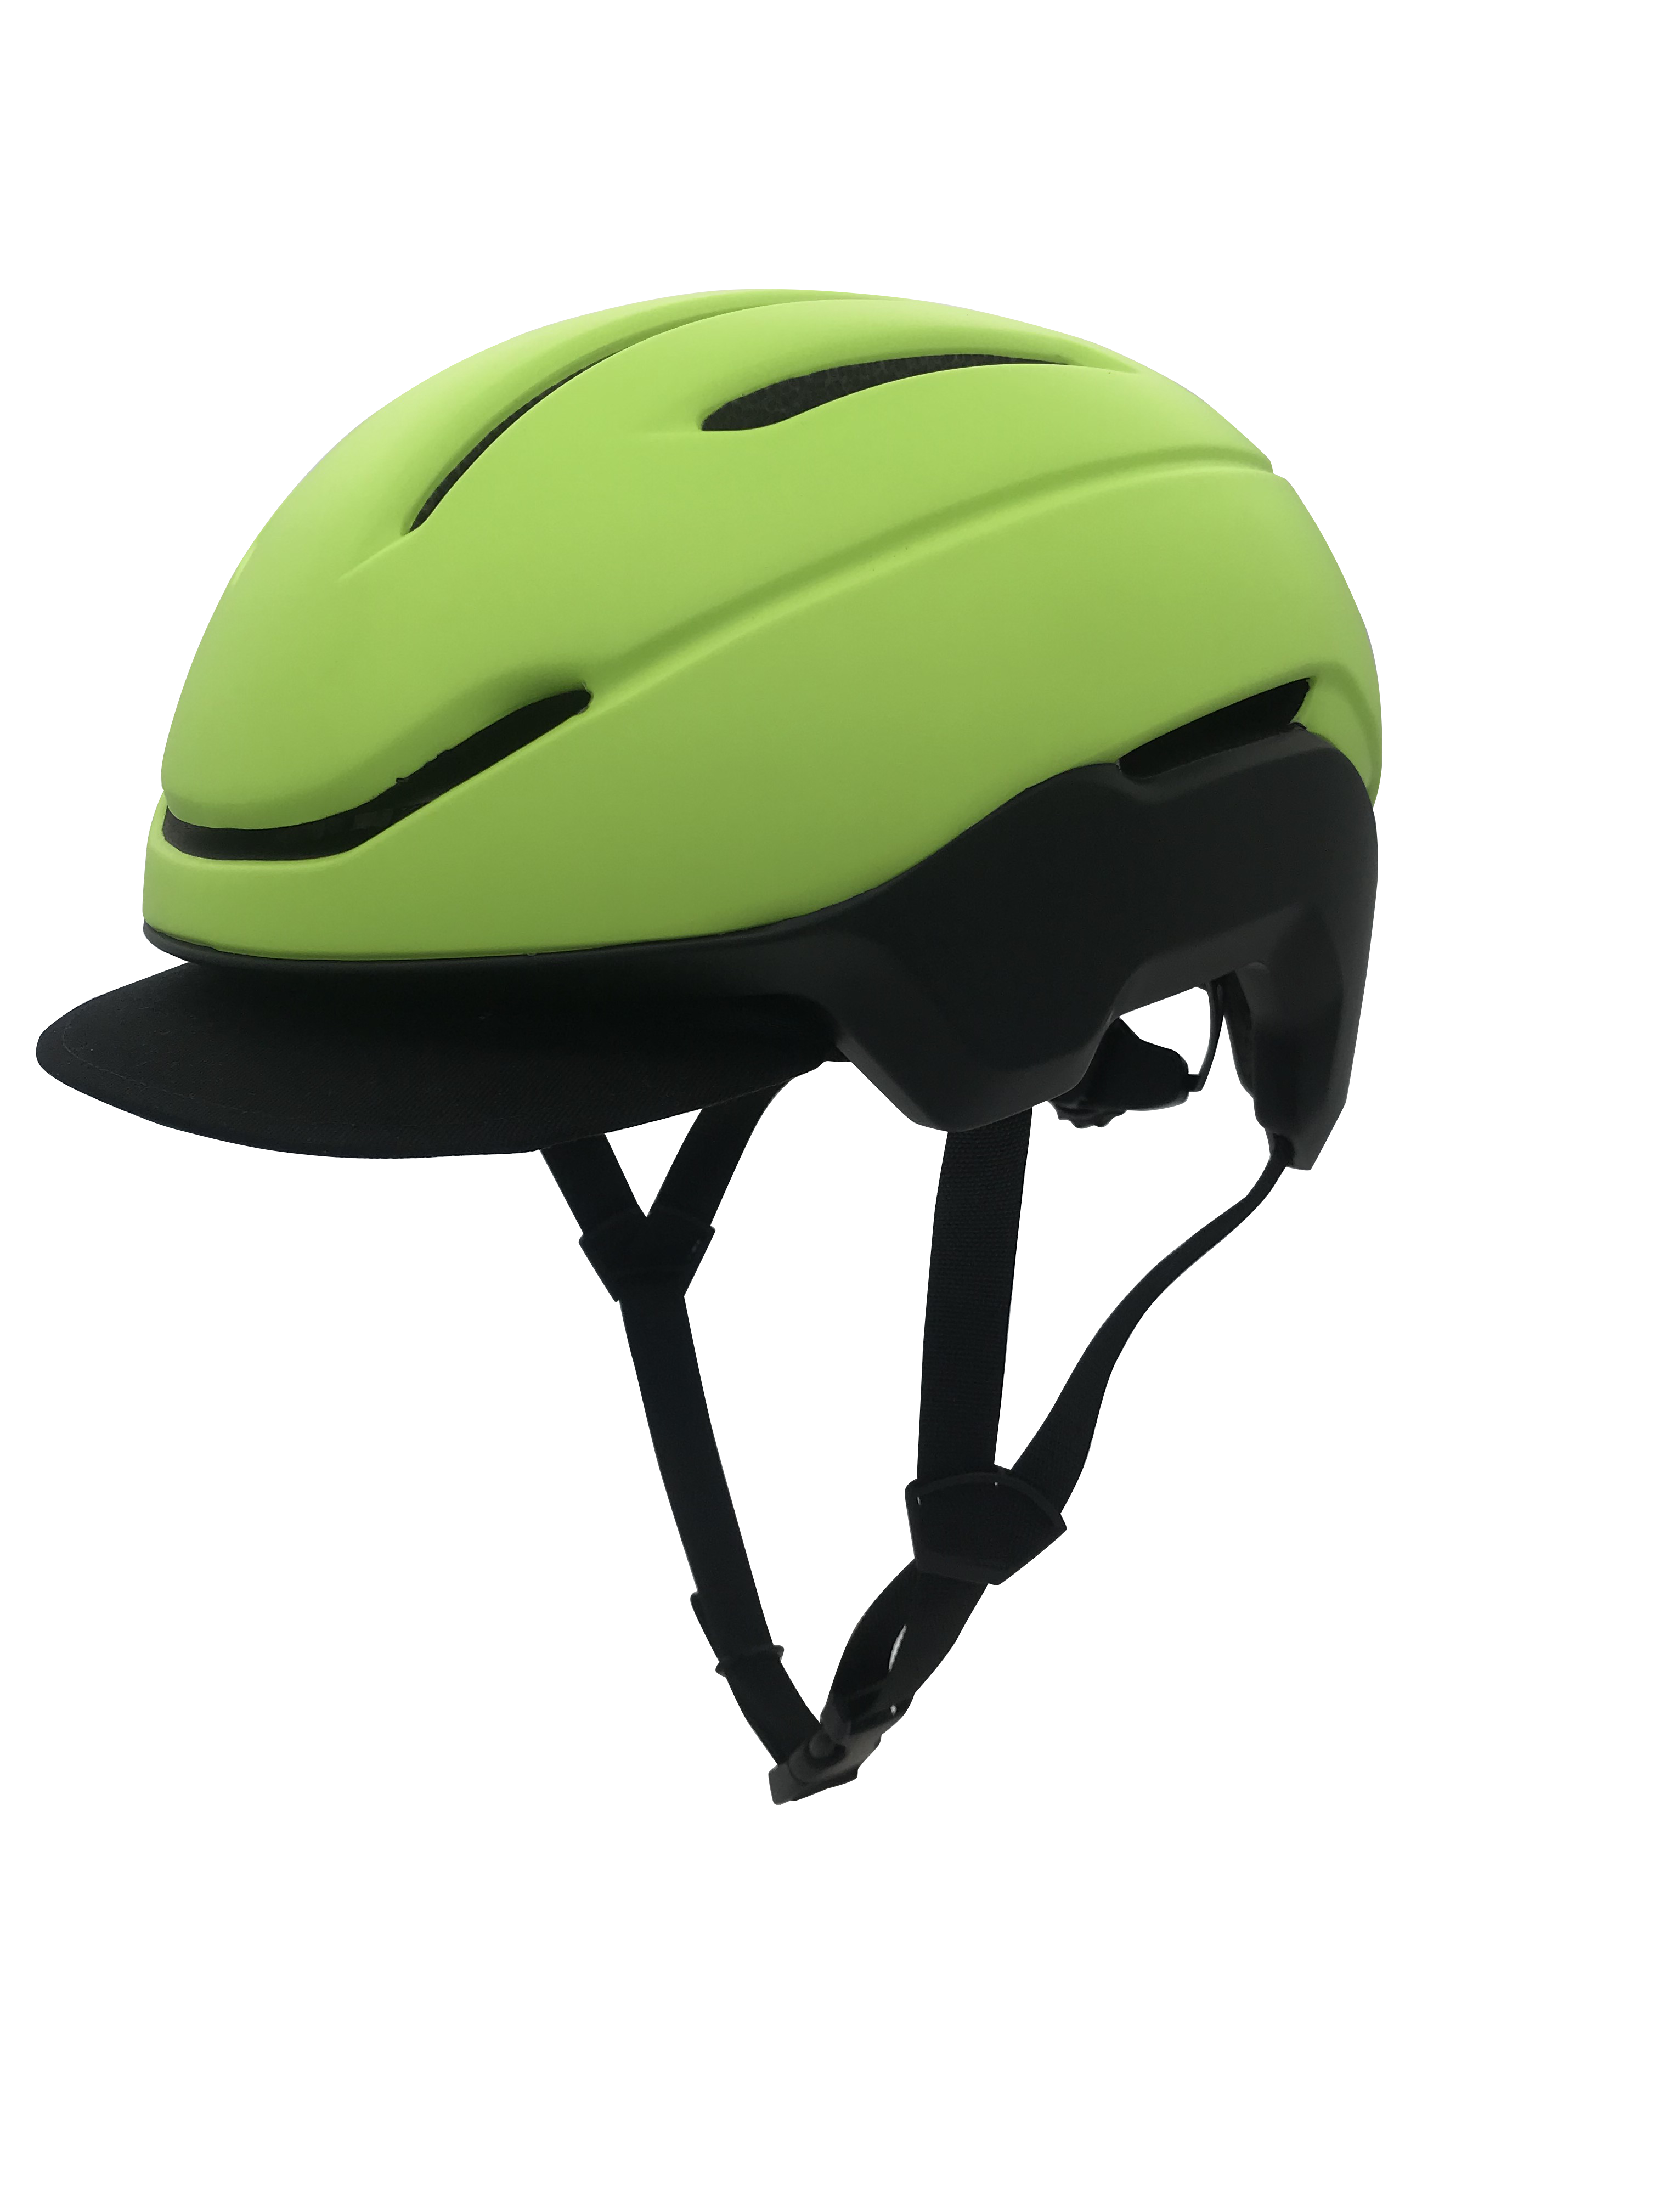 Popular Design for Spy Mips Helmet - Commuter helmet VU103-Yellow – Vital